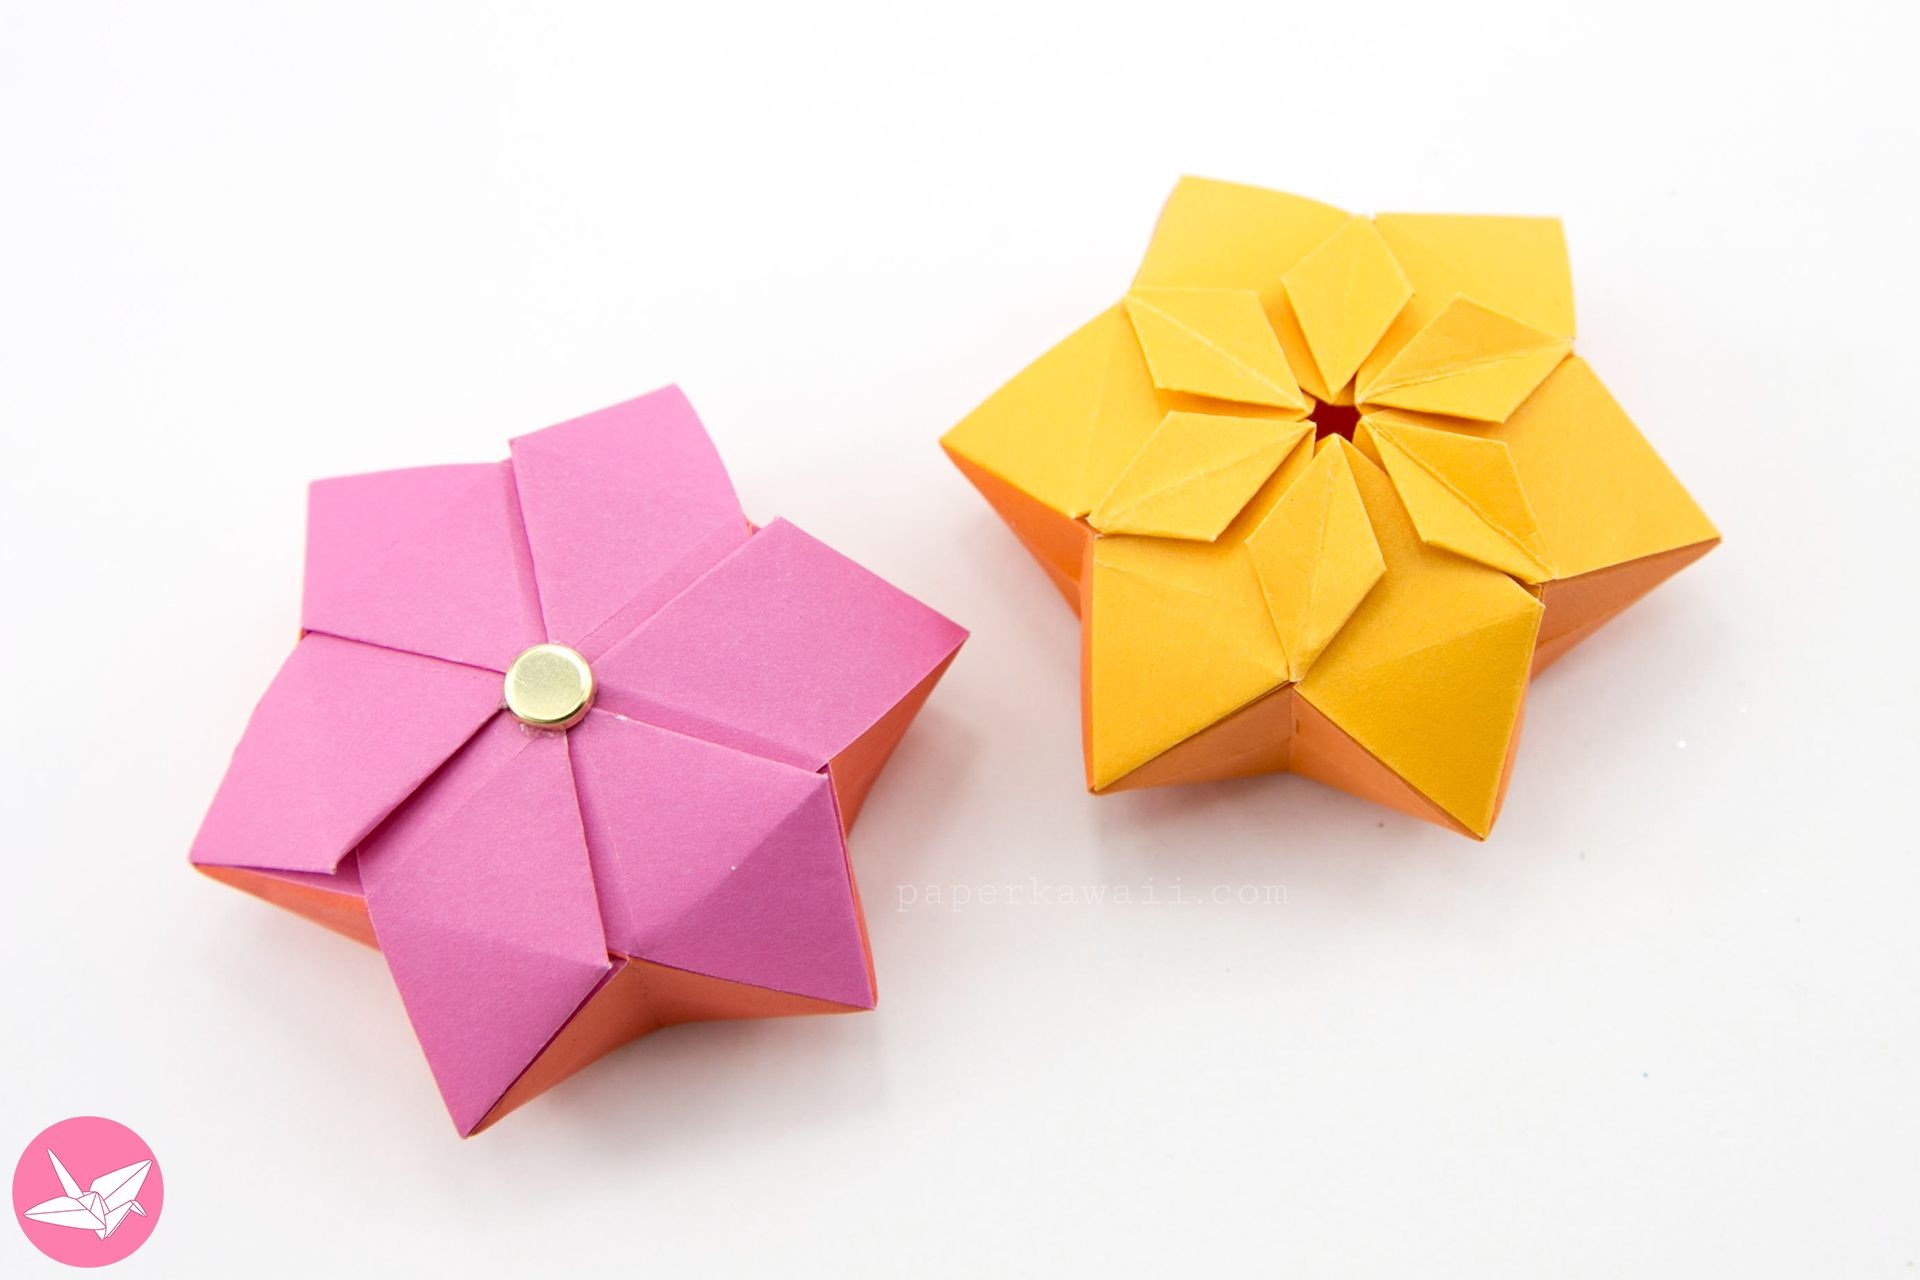 Papercraft origami origami Hexagonal Puffy Star Tutorial